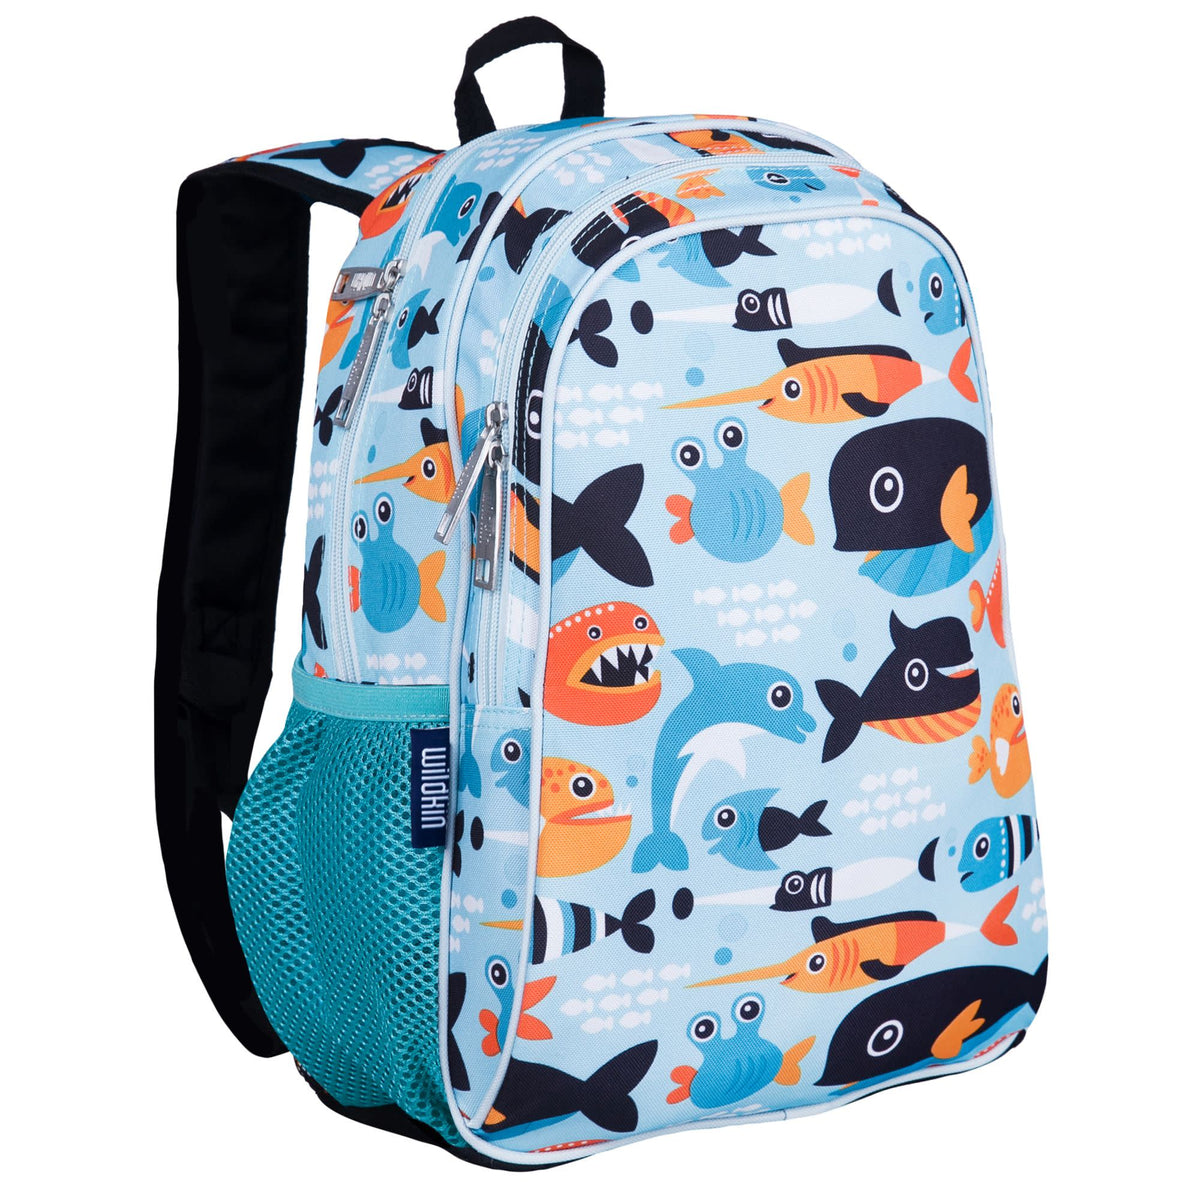 Wildkin 15 Inch Kids Backpack | School Backpacks - Big Fish